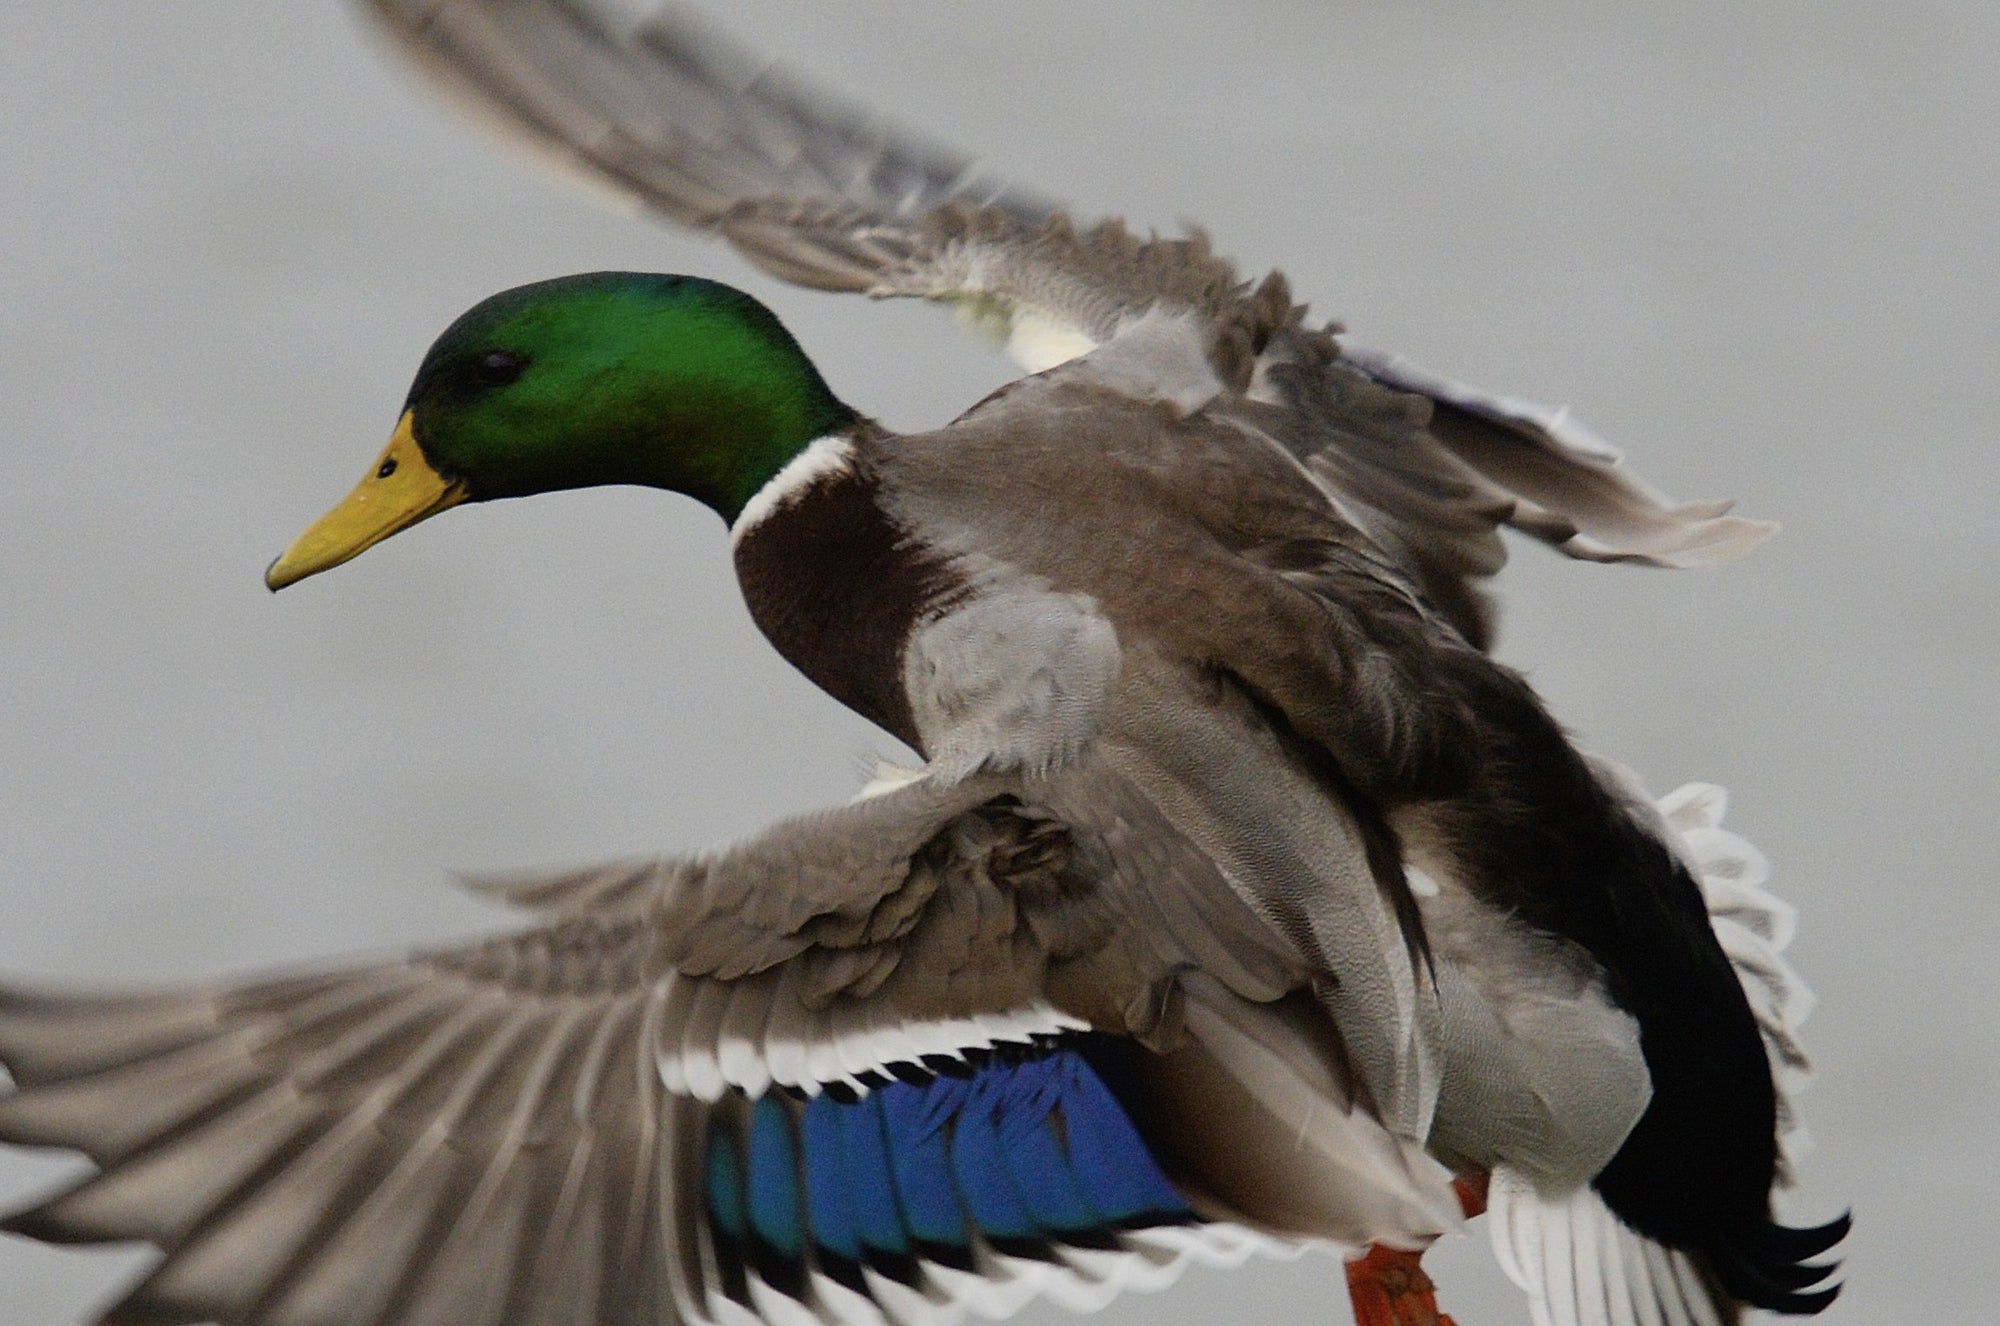 Ducks Unlimited Conservation